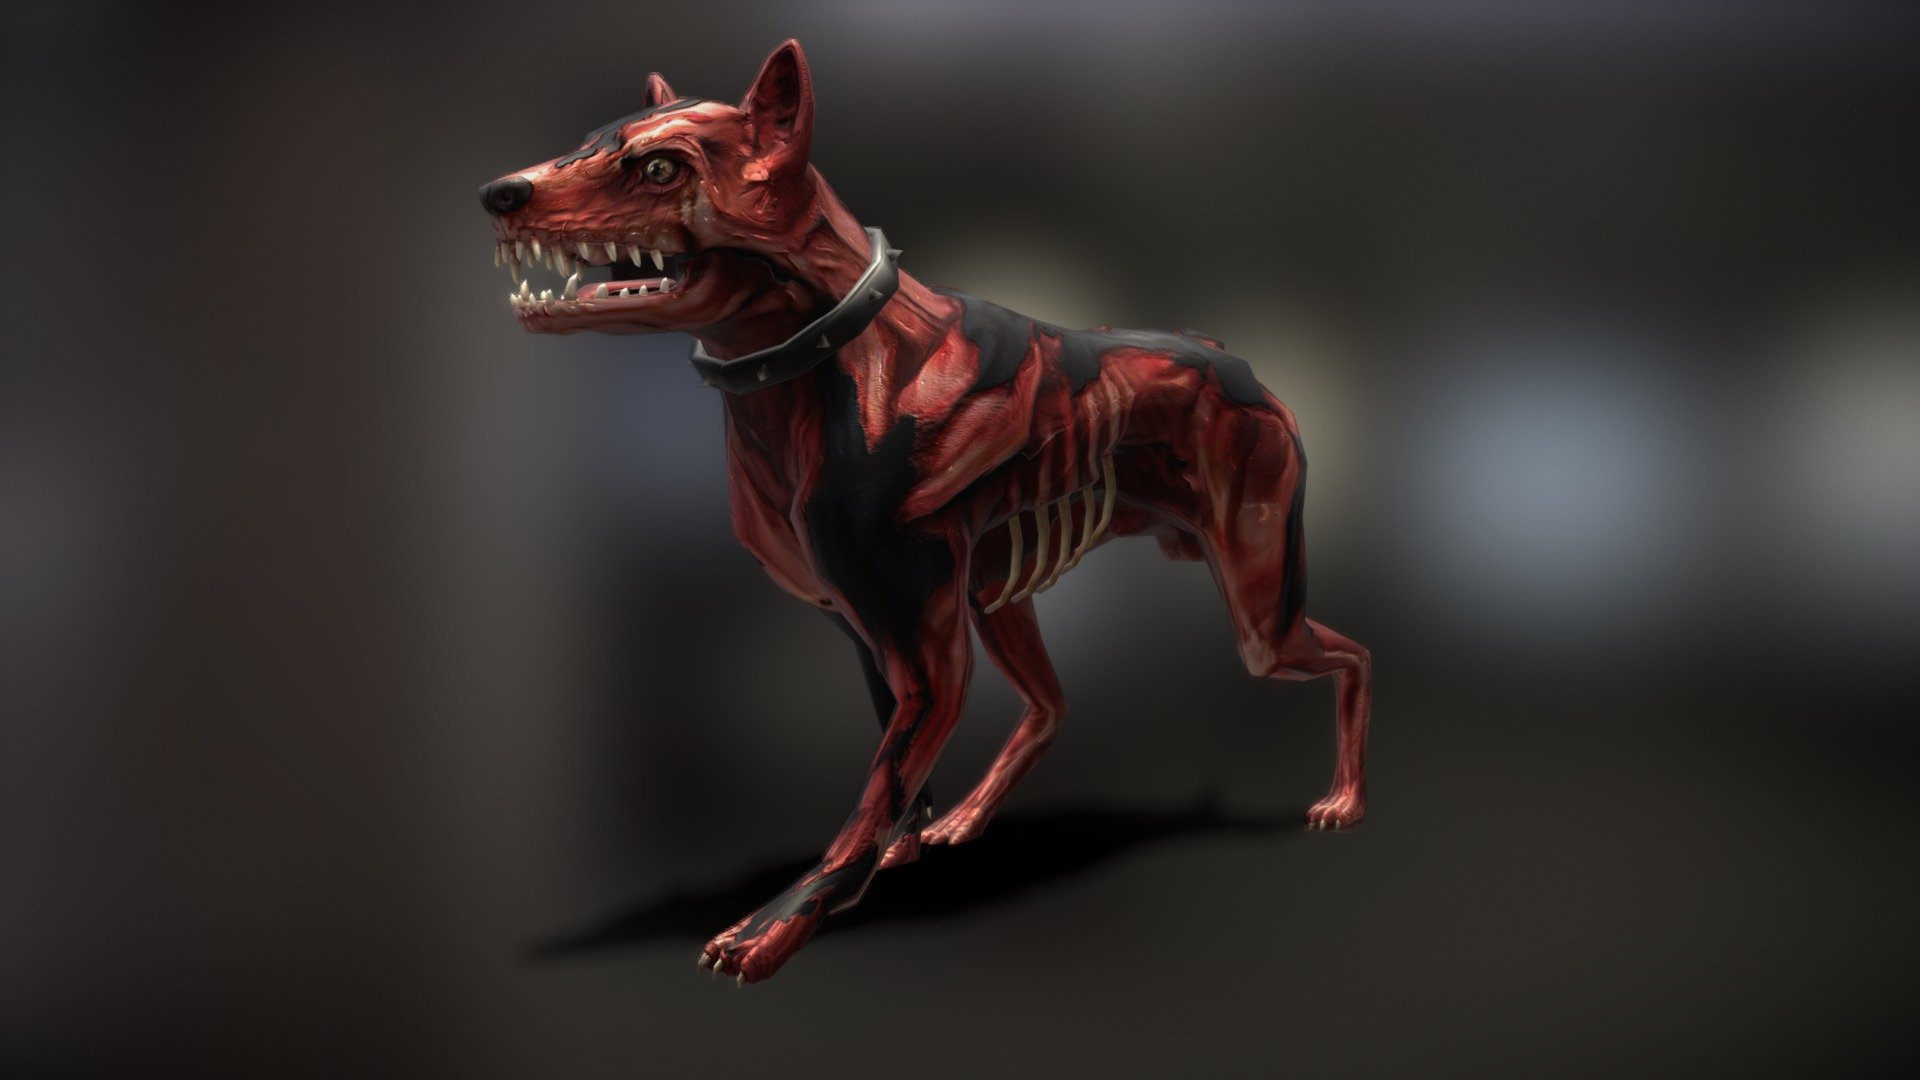 3DRT - Zombie Dog - Buy Royalty Free 3D model by 3DRT.com 3d model